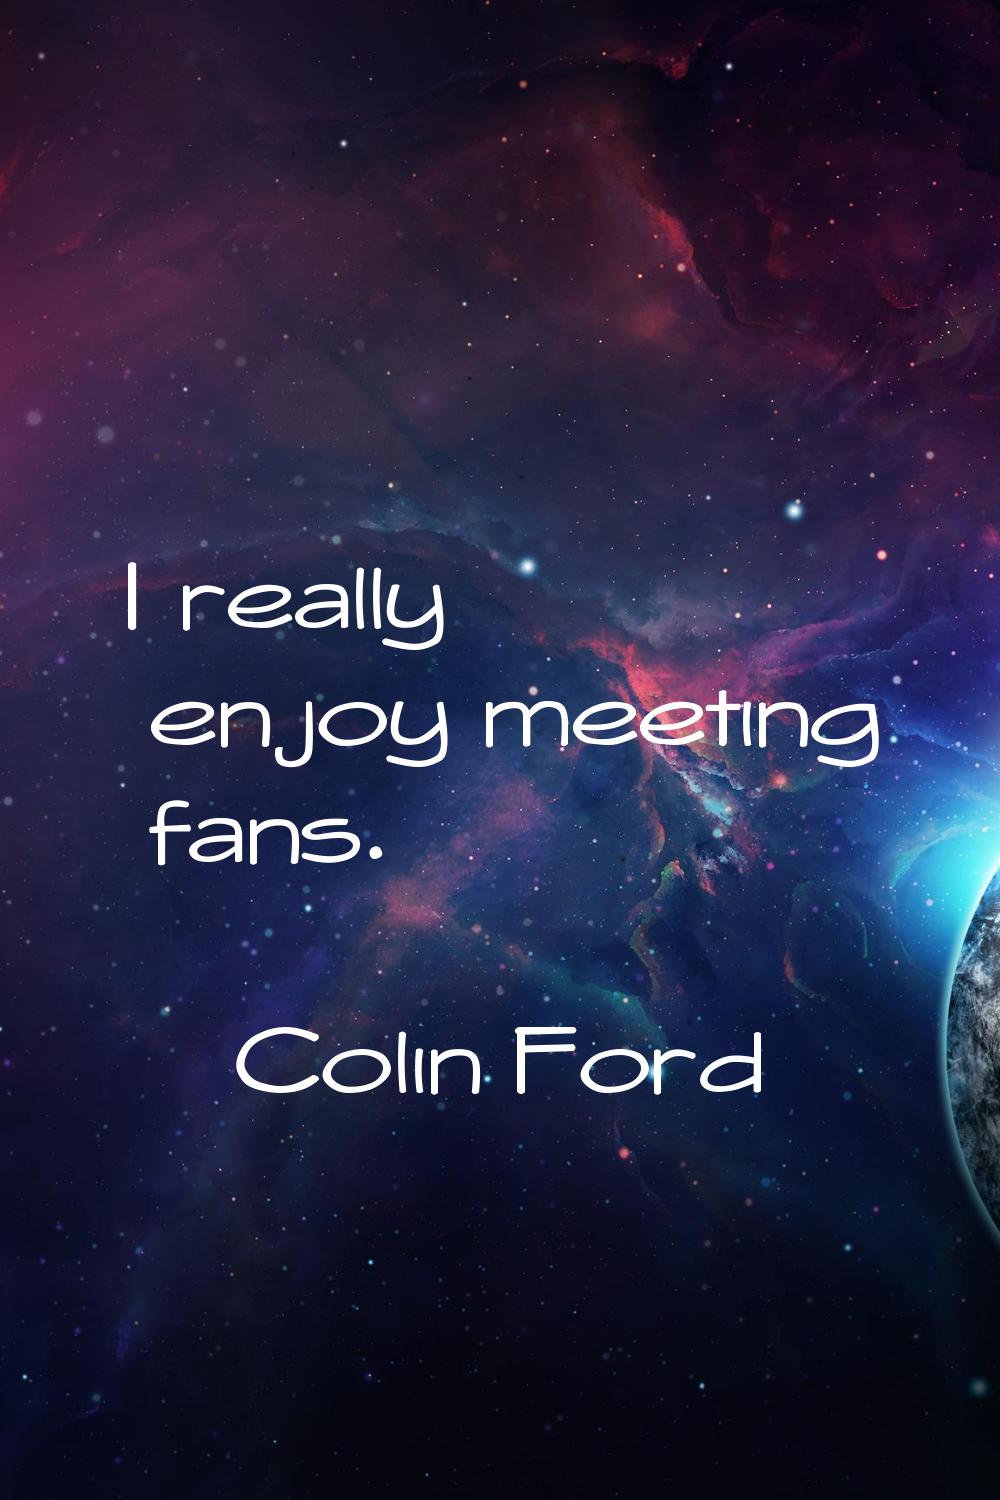 I really enjoy meeting fans.